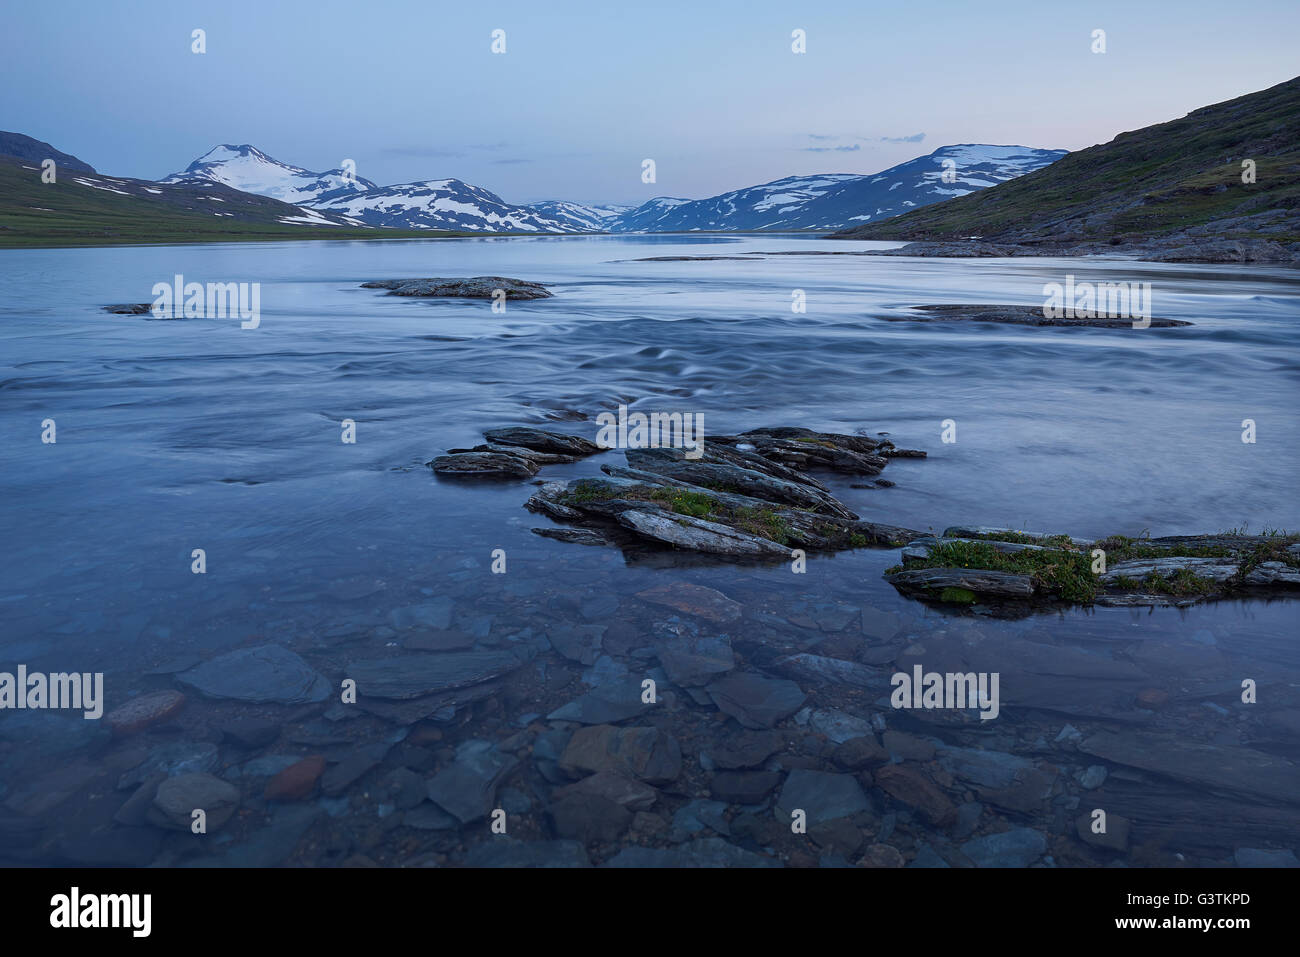 Sweden, Lapland, Padjelanta National Park, Sarjasjaure, lake at dusk, mountain range in background Stock Photo